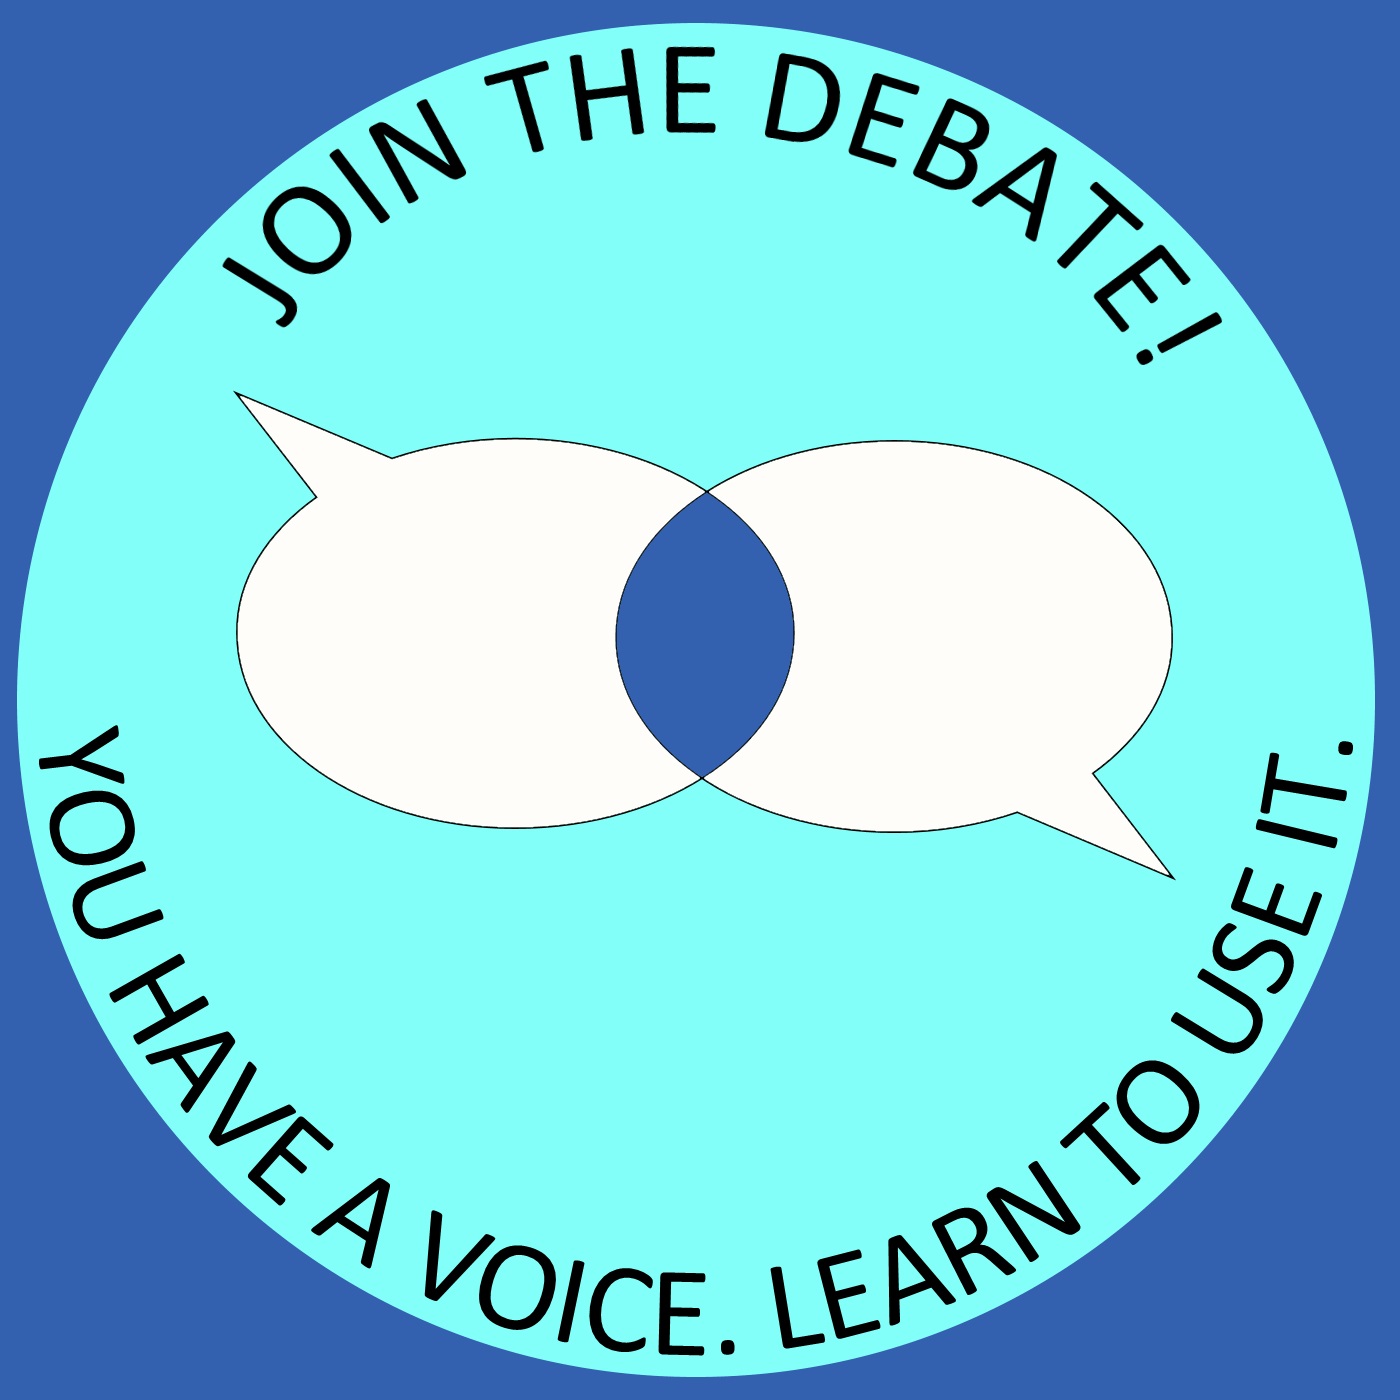 Join the Debate Logo final.jpg